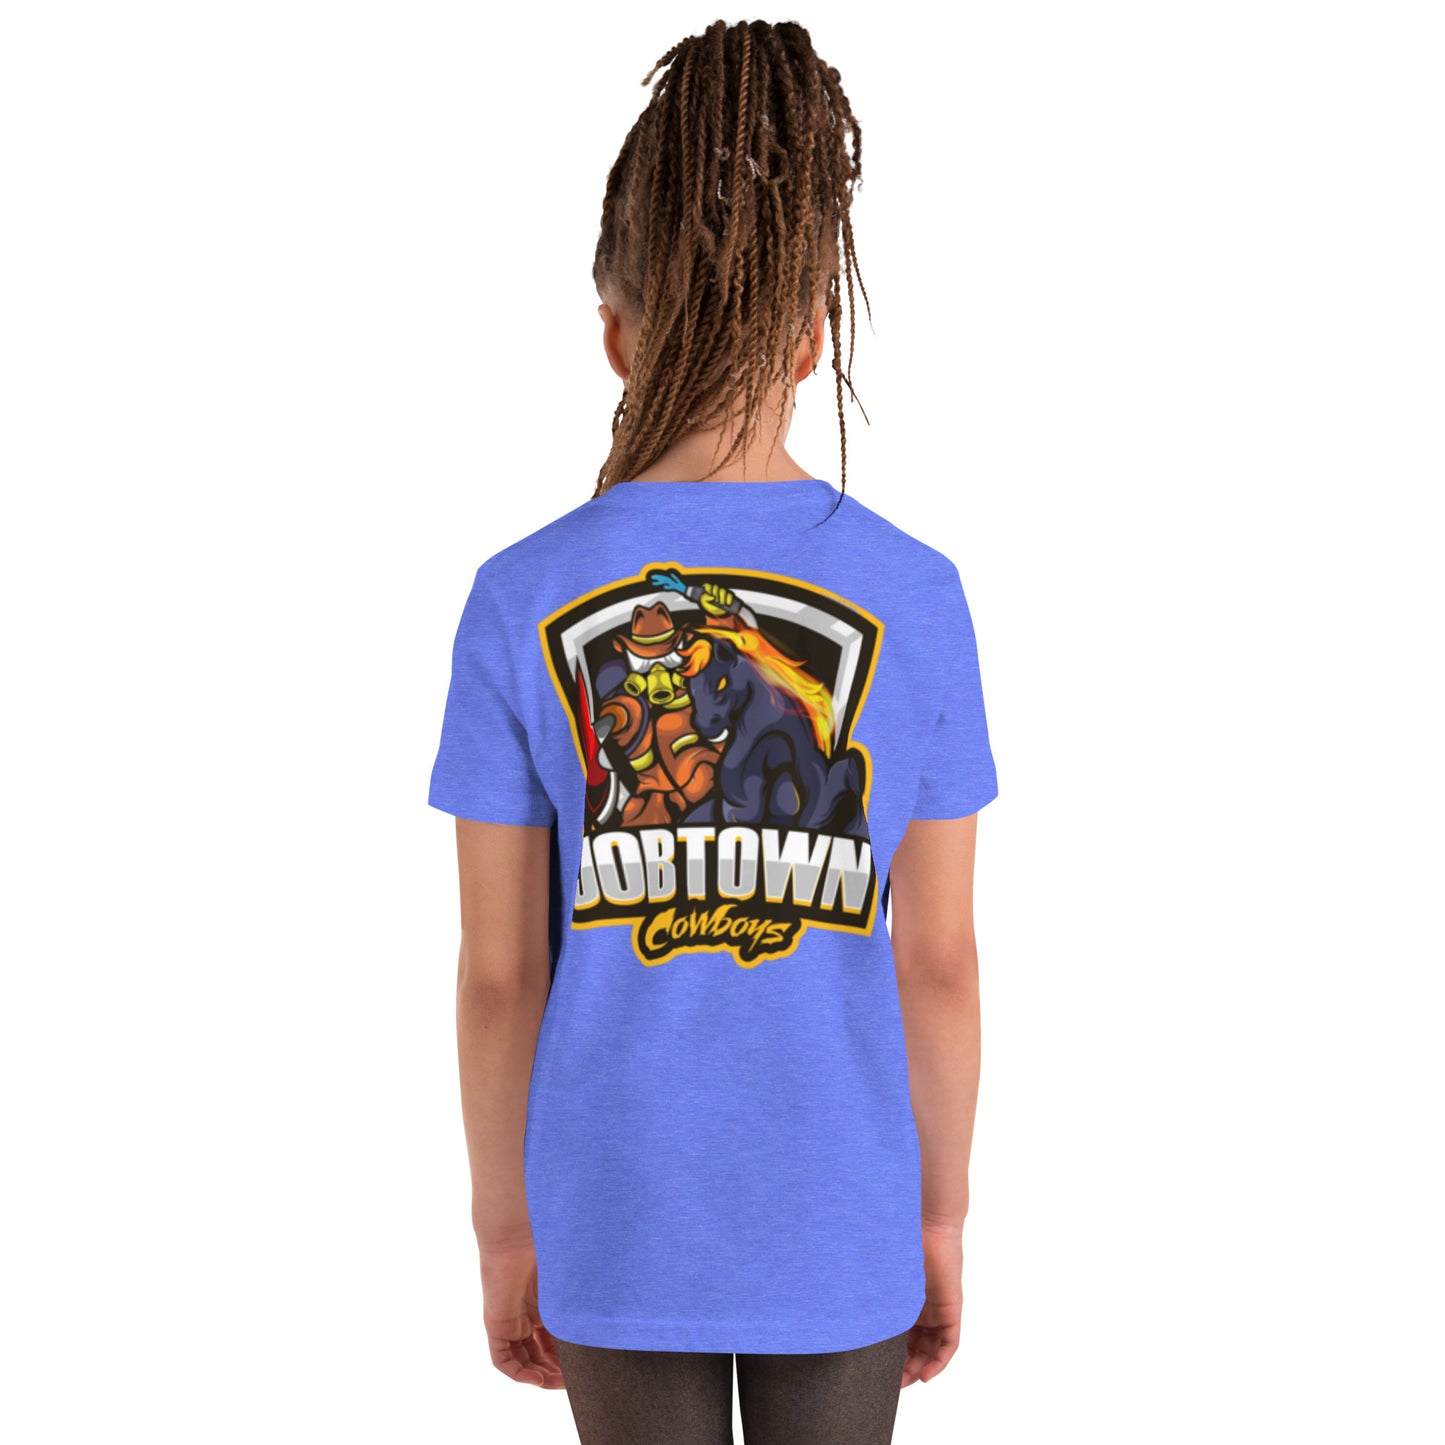 Jobtown Cowboys Firefighter Youth T-Shirt- The Original Design